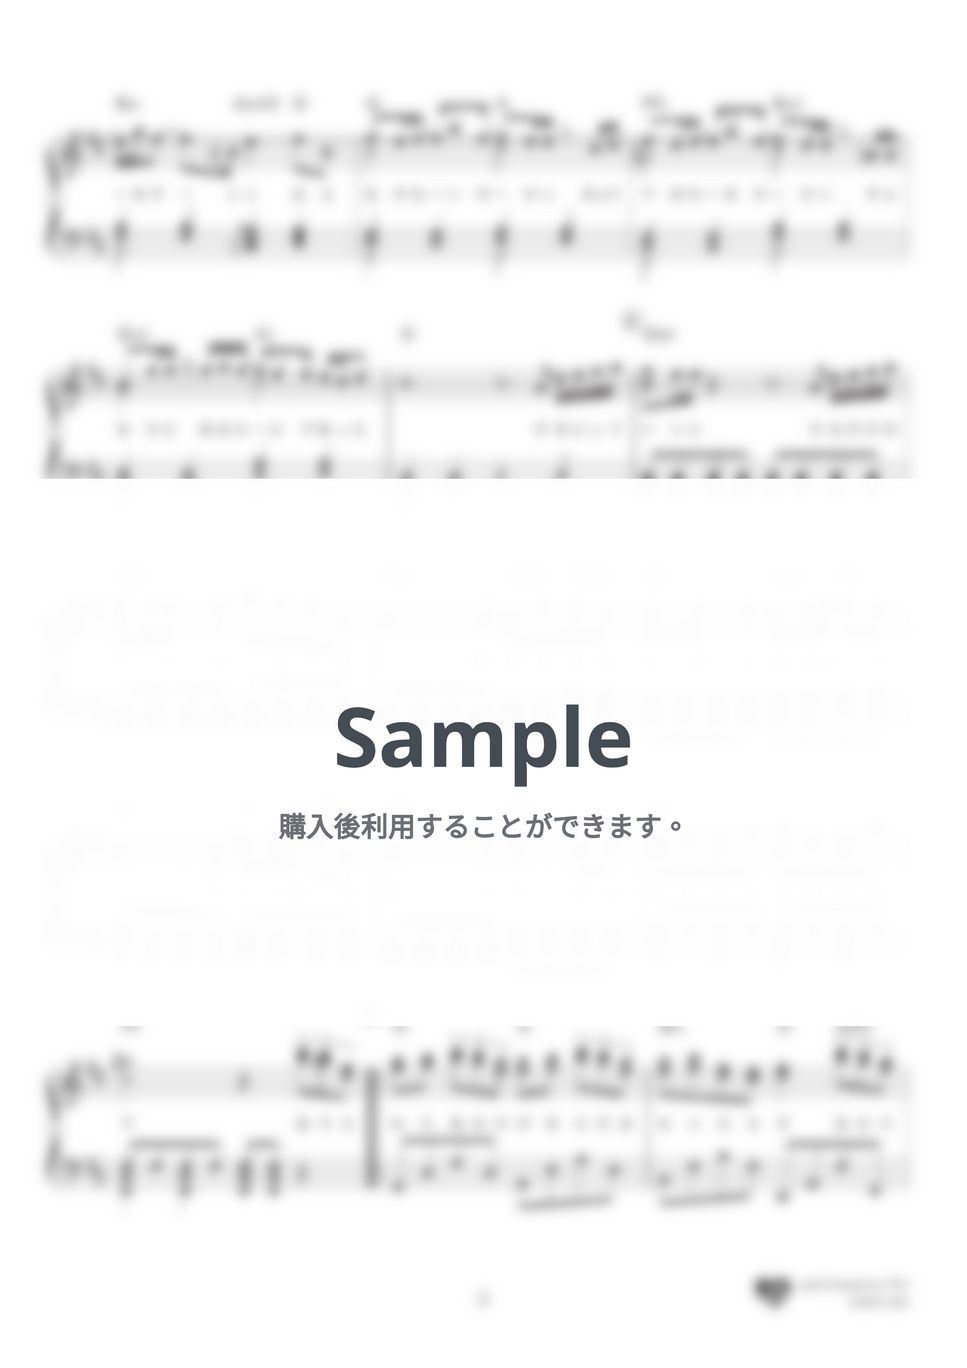 YOASOBI - アンコール (Google Pixel 5, Pixel 4a(5G) CMソング) by 楽譜仕事人_高橋美夕己